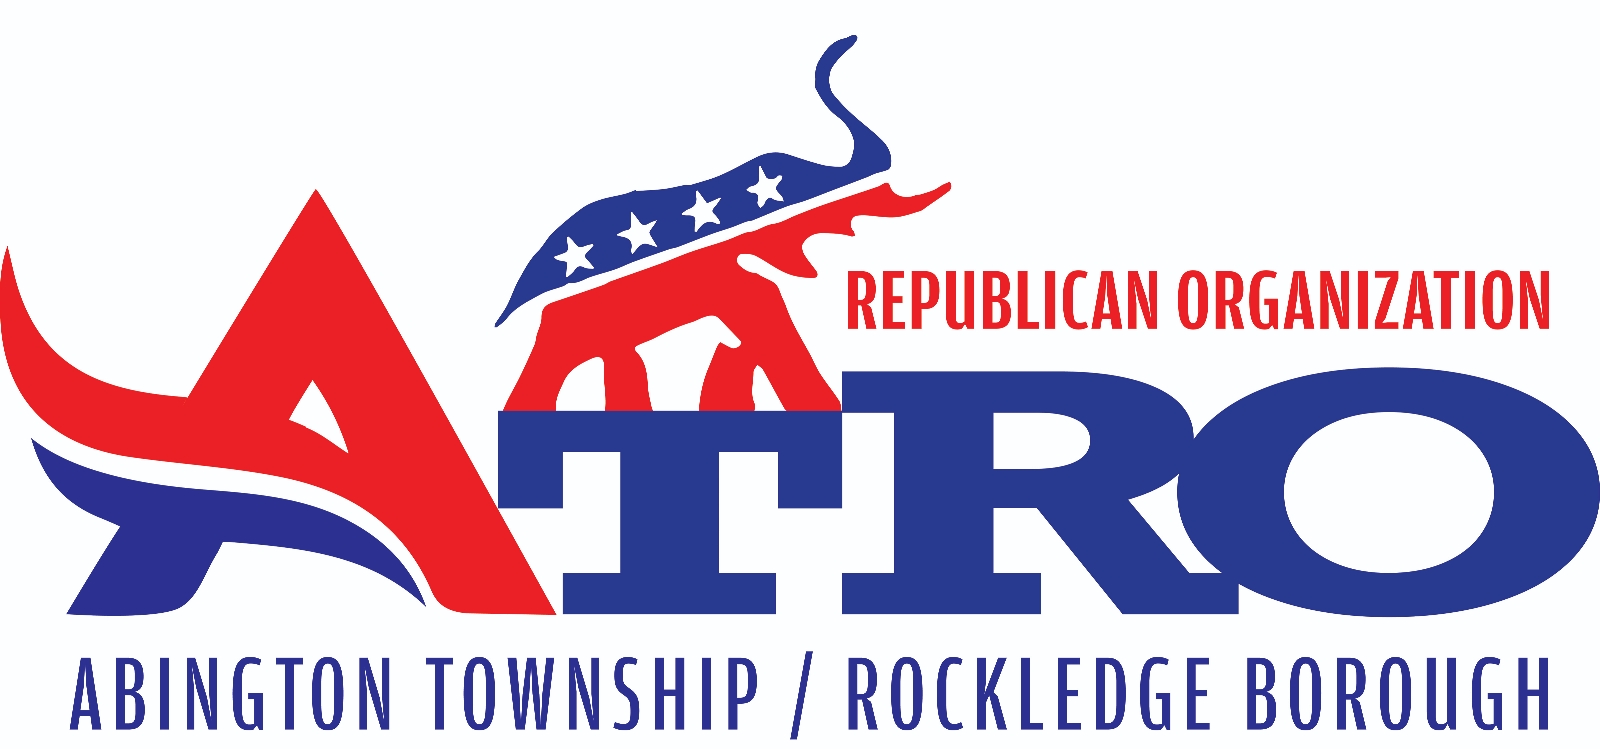 Abington Township Rockledge Borough Republican Organization